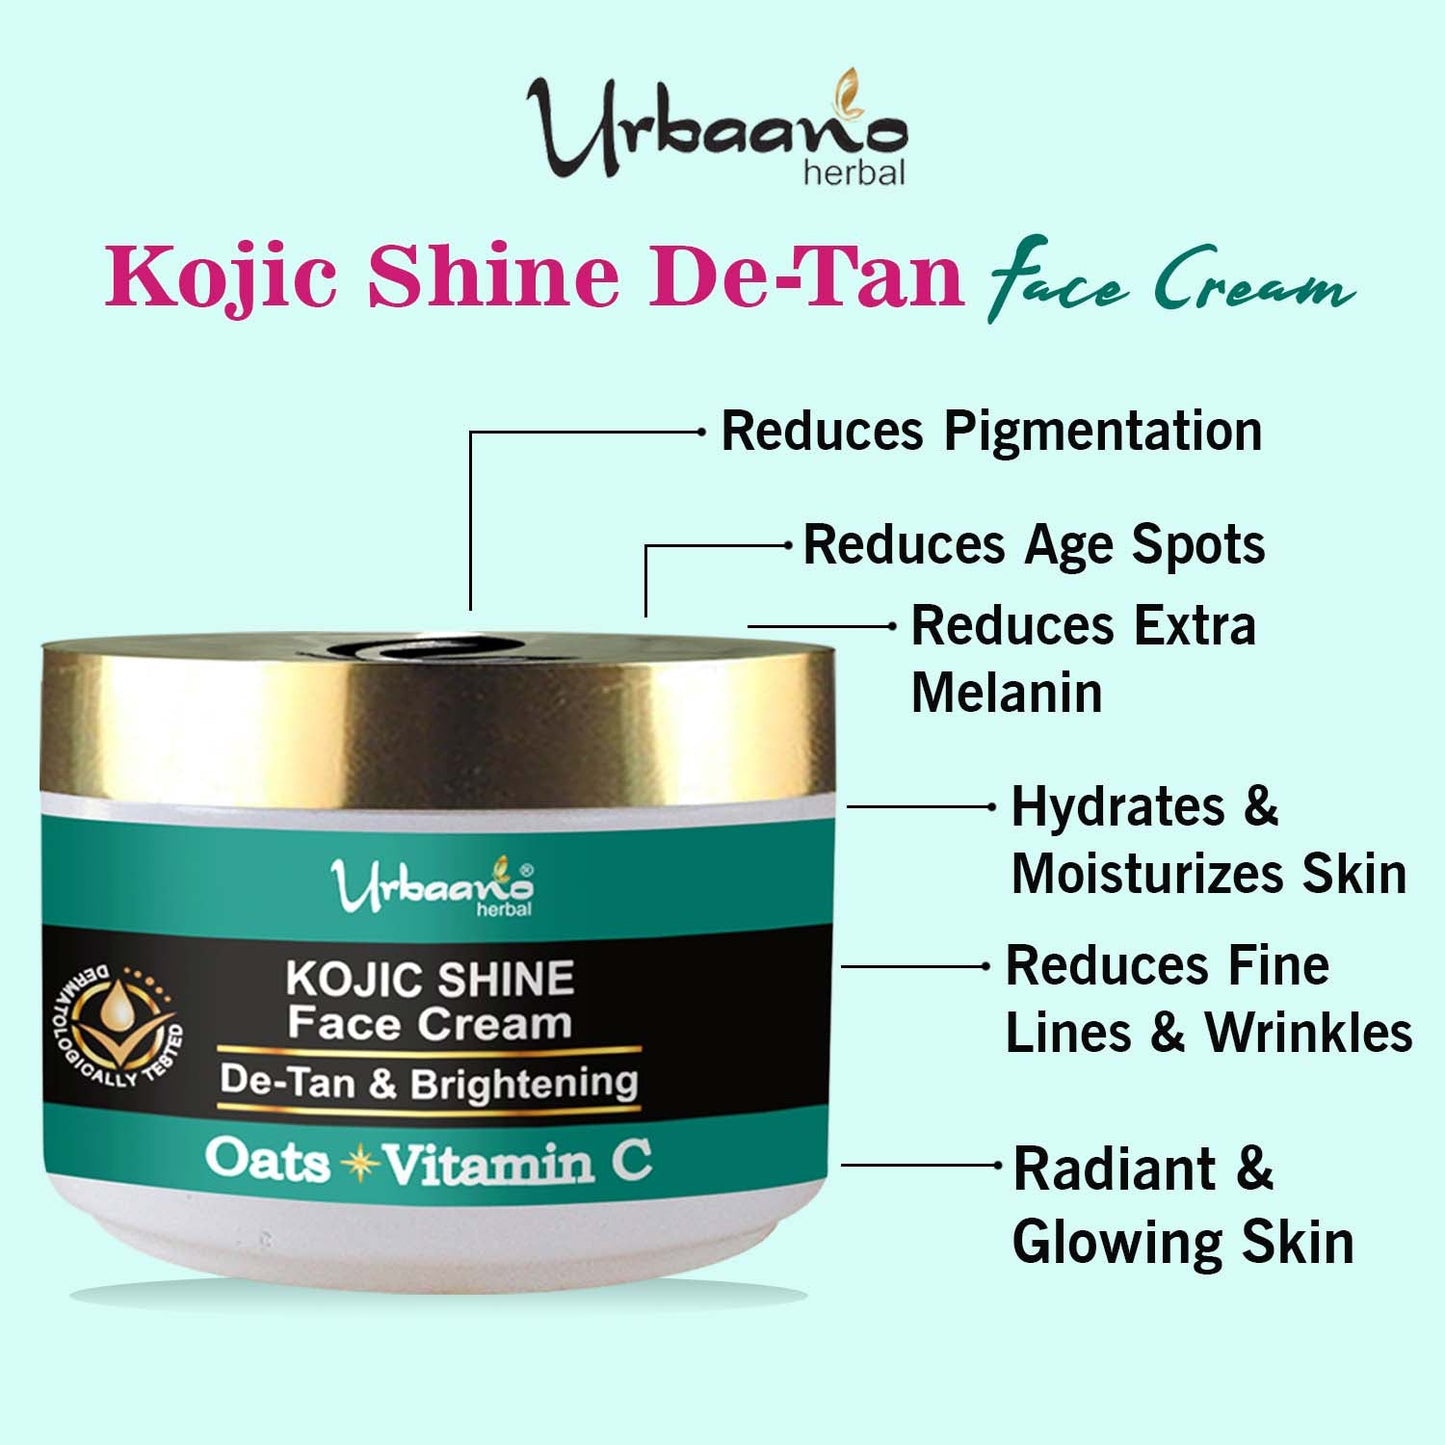 urbaano herbal kojic shine face ctream for detaning & skin brightening, reduces age spots, pigmentation, fine lines, wrinkles. moisturizes hydrates skin